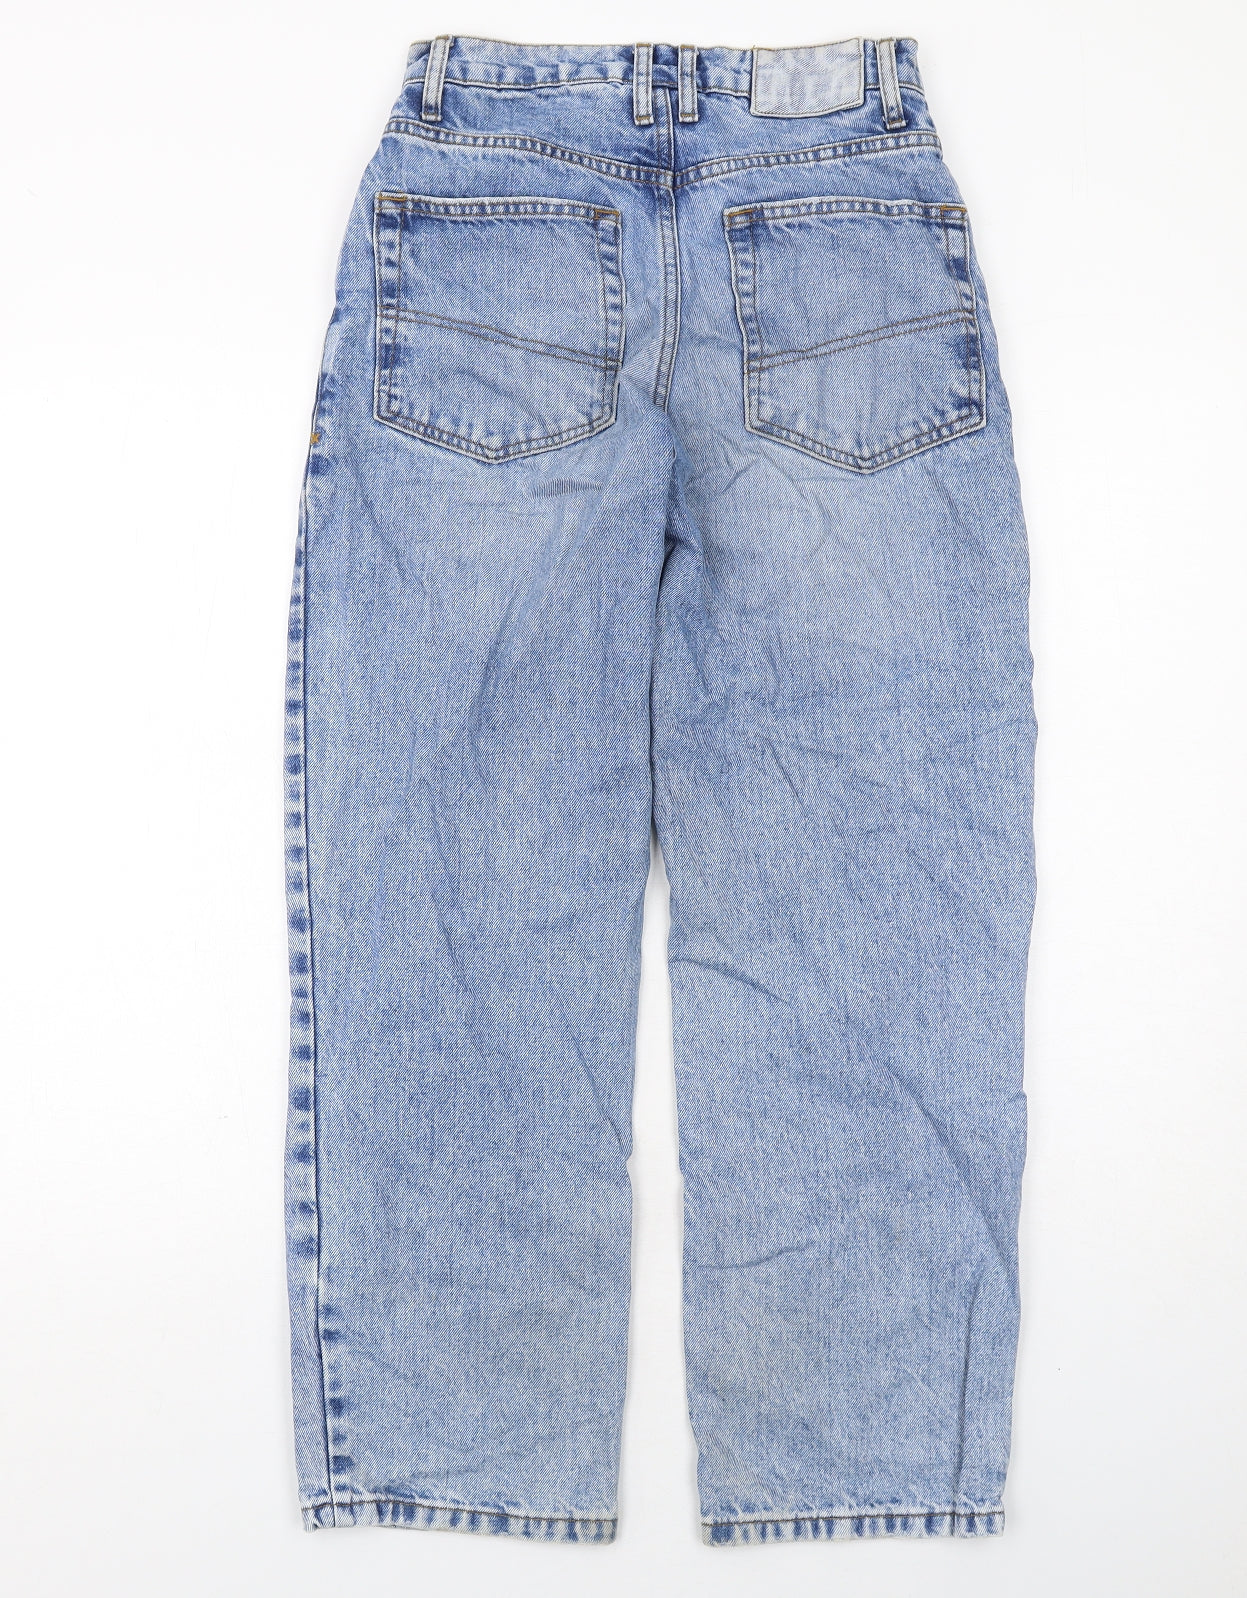 COLLUSION Womens Blue Cotton Boyfriend Jeans Size 6 L28 in Regular Zip